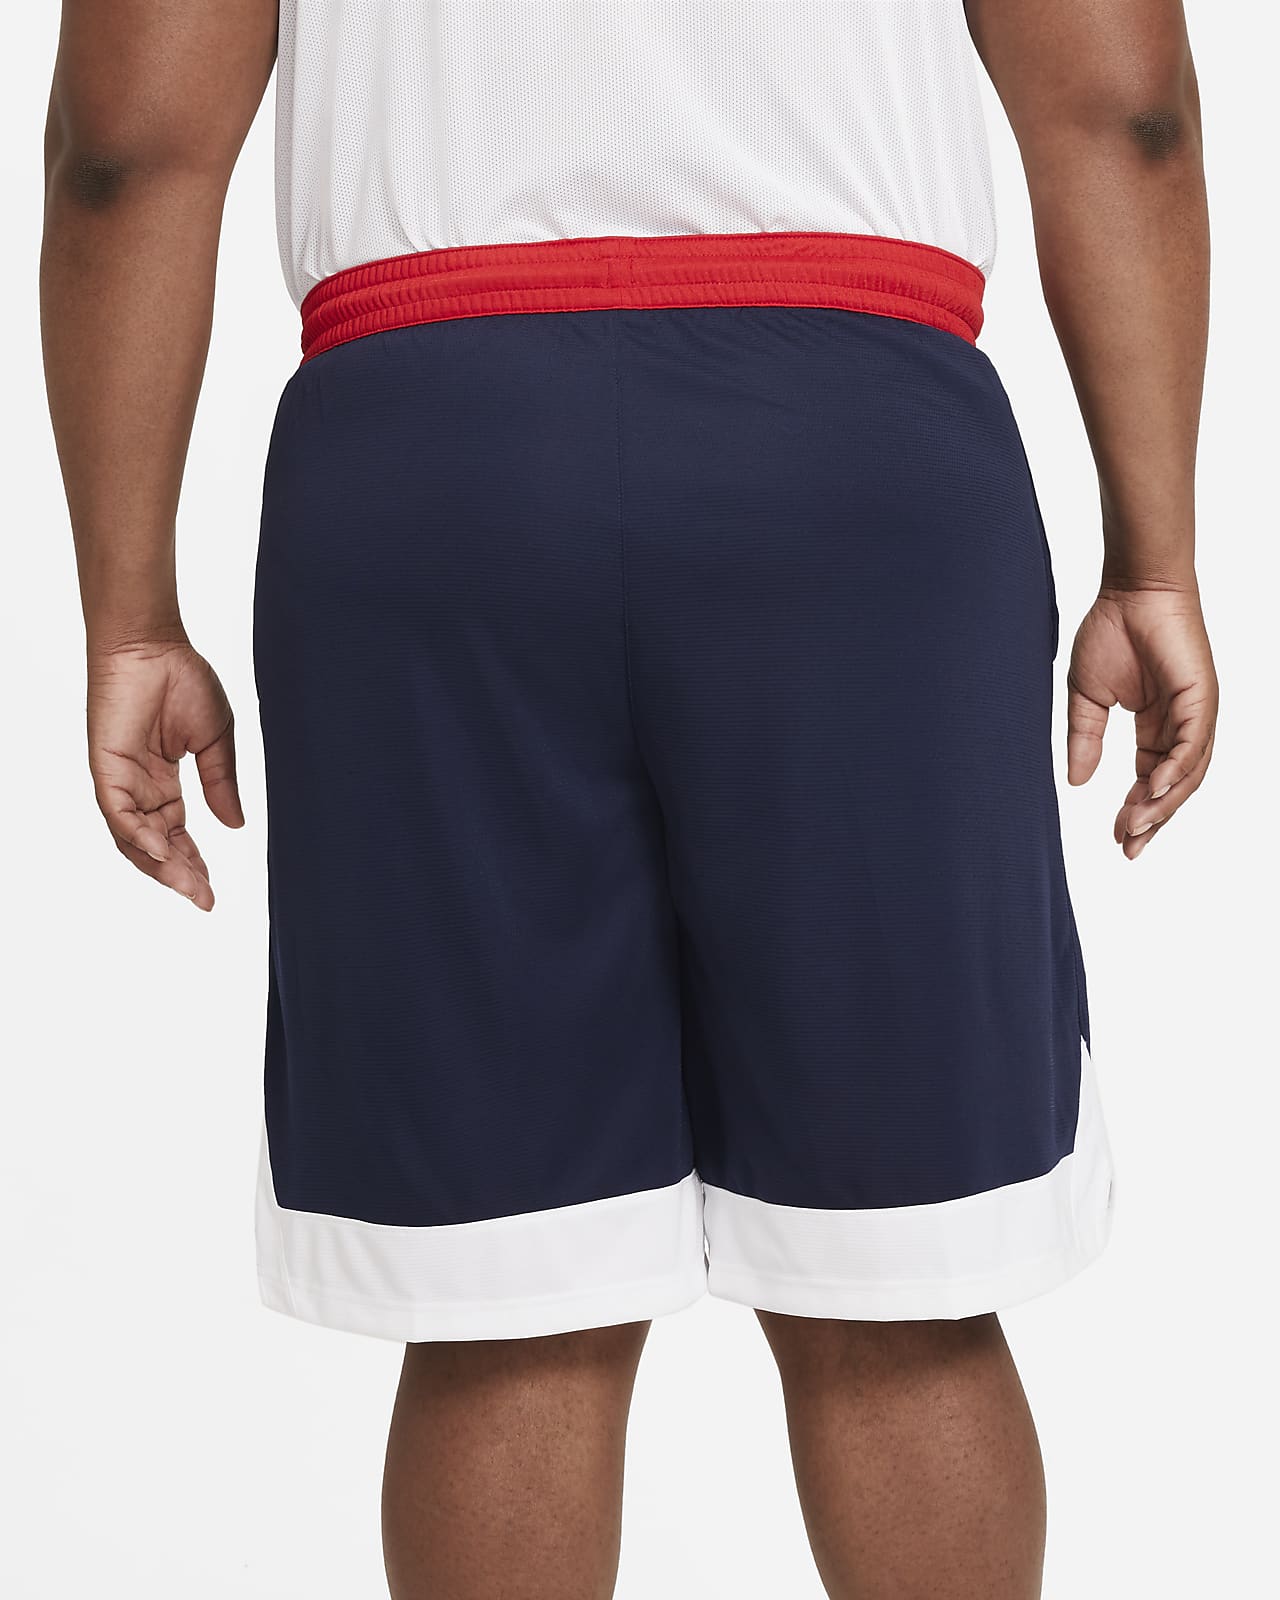 3x jordan basketball shorts